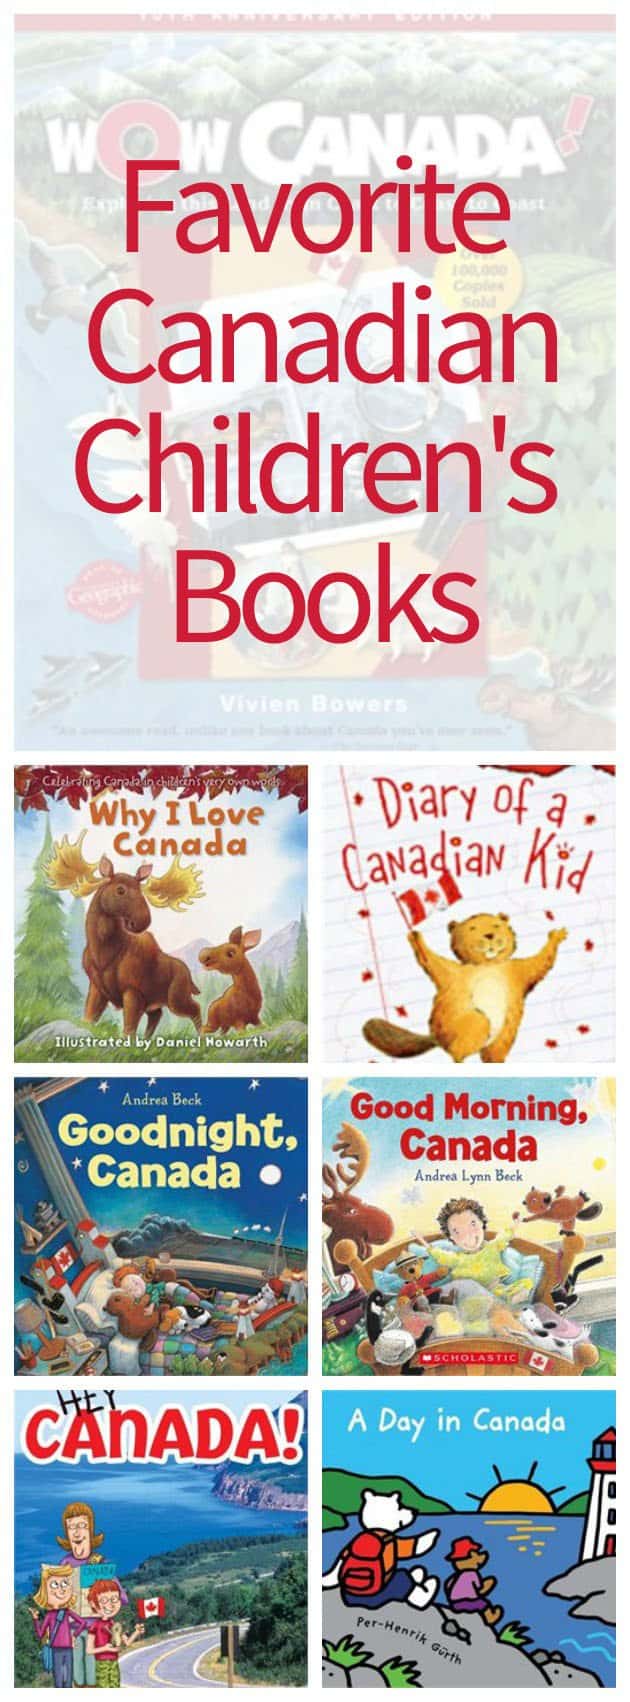 Favorite Canadian Children's Books